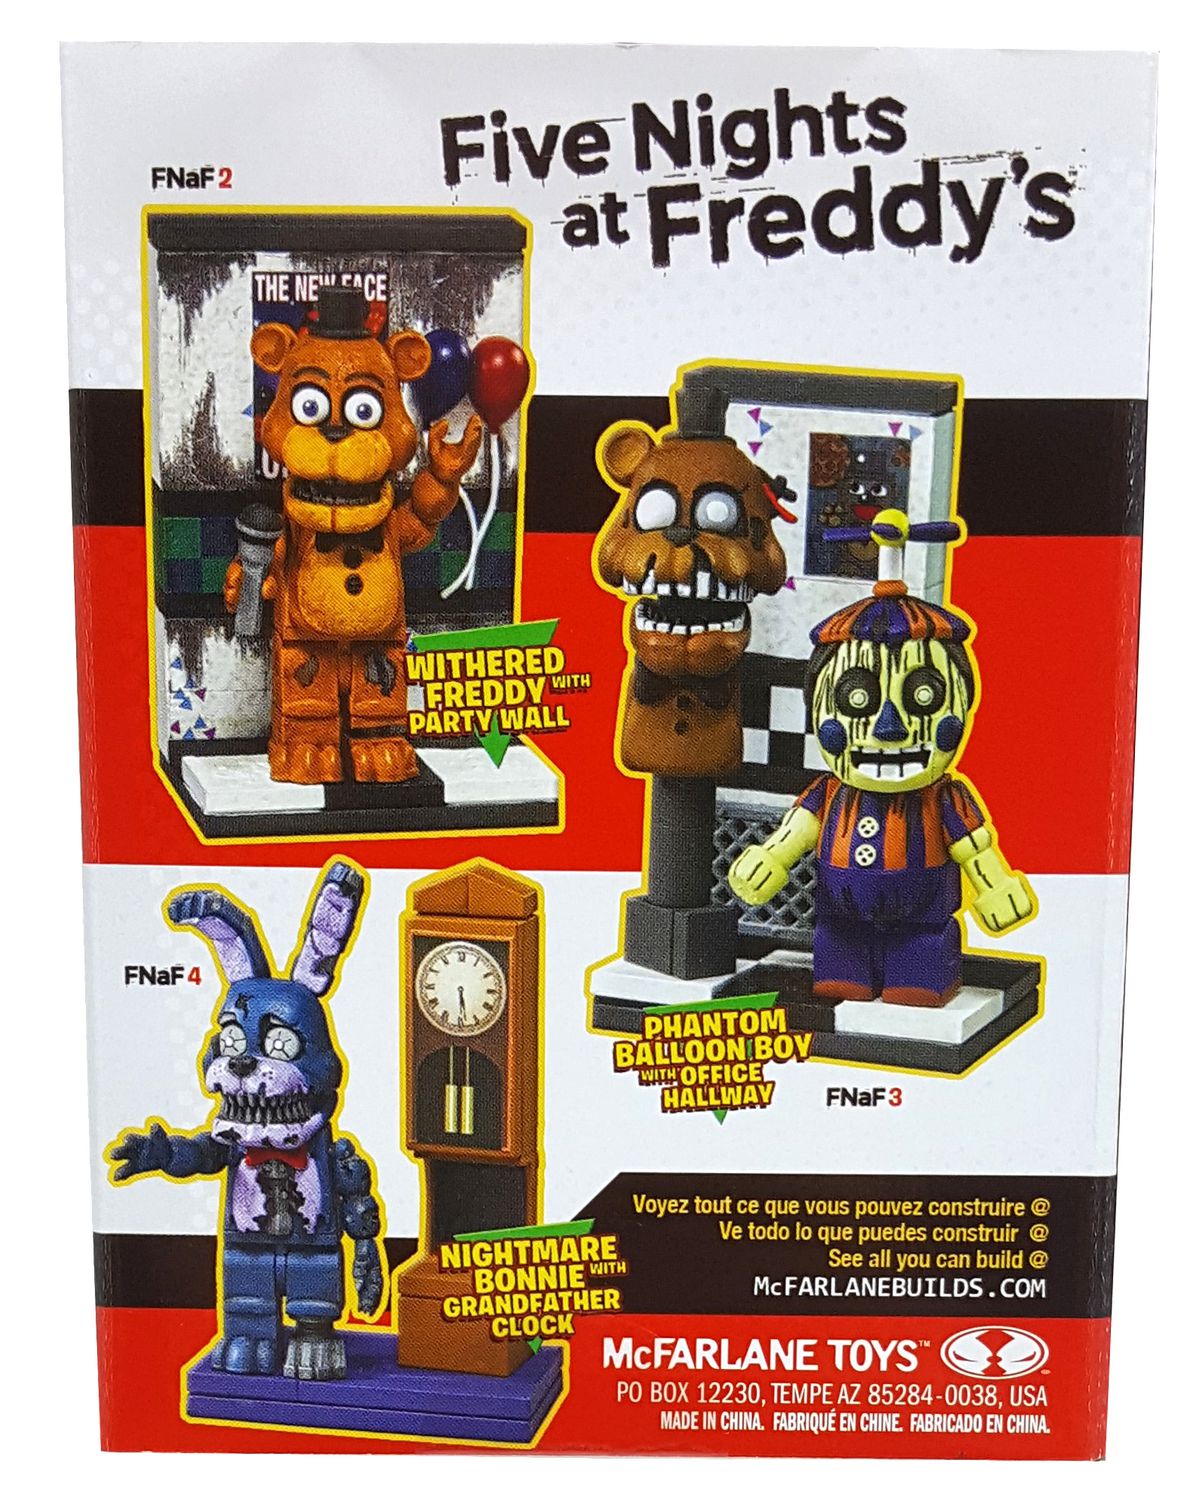 Five Nights At Freddy's Phantom Balloon Boy w/ Office Hallway Minifigure 39  pcs!